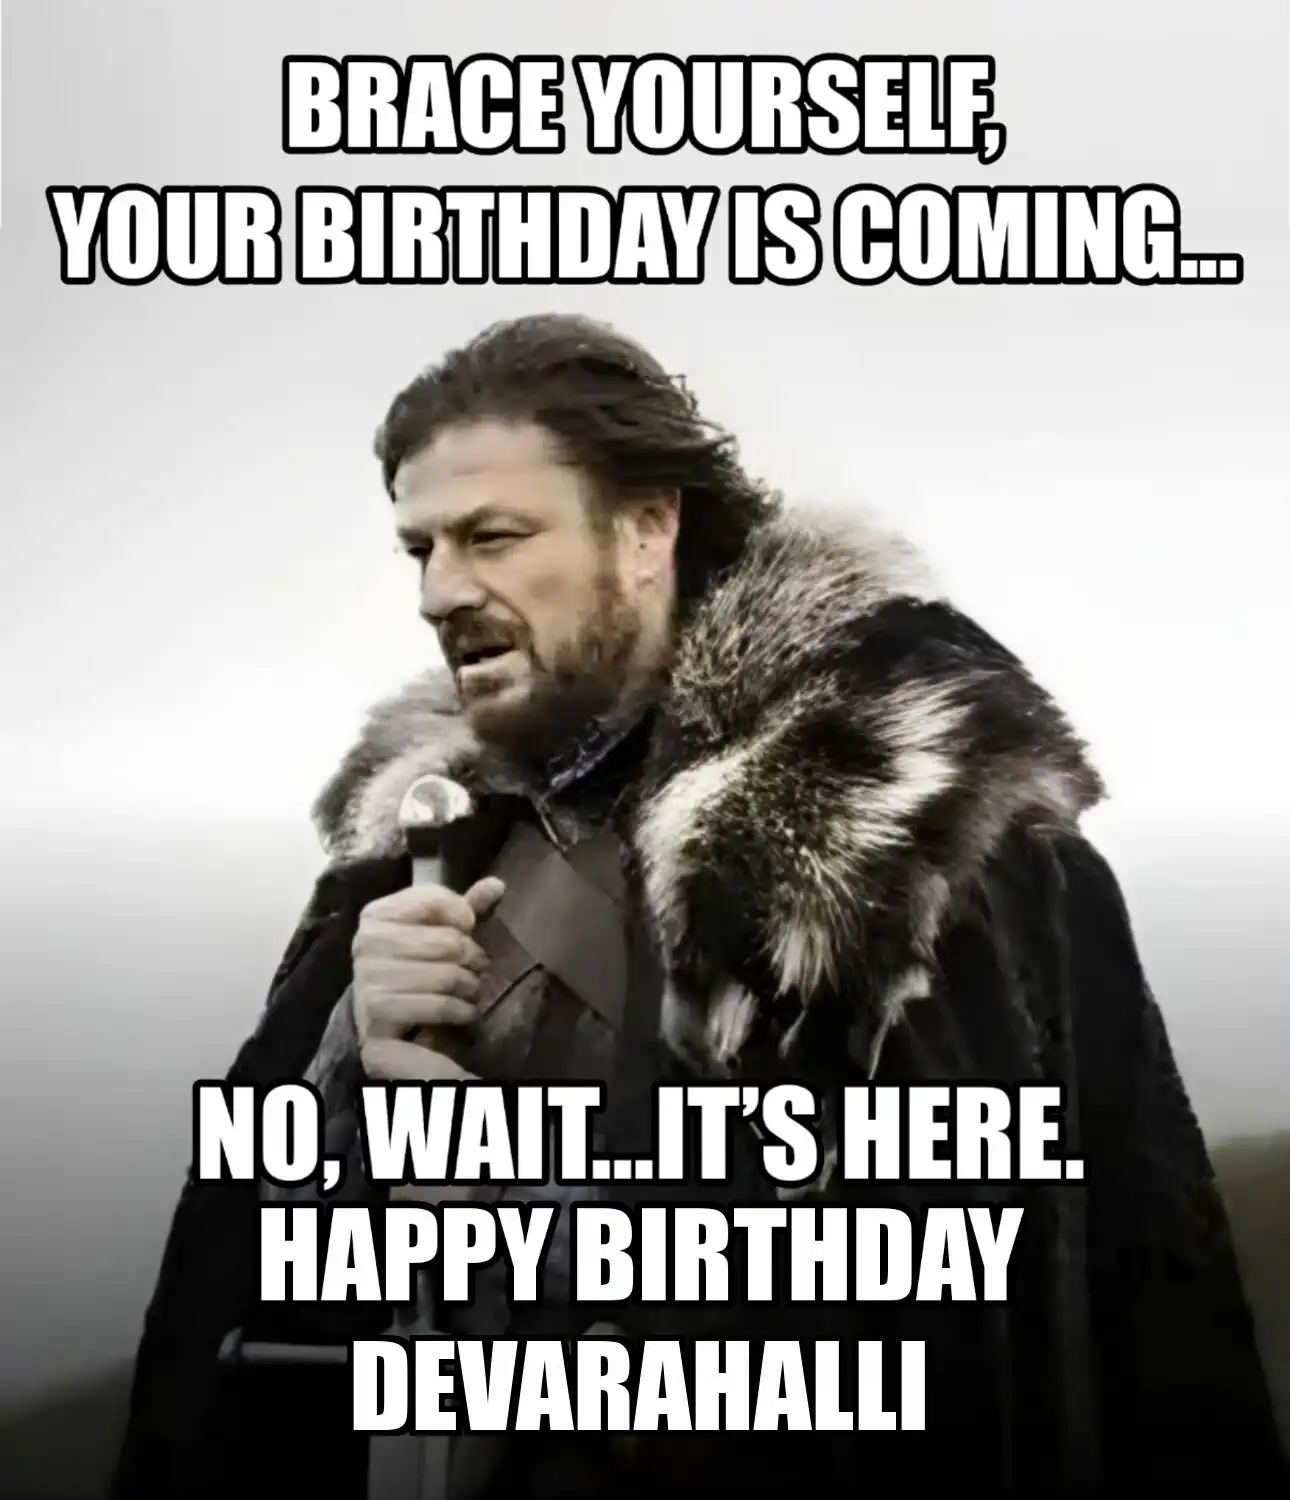 Happy Birthday Devarahalli Brace Yourself Your Birthday Is Coming Meme